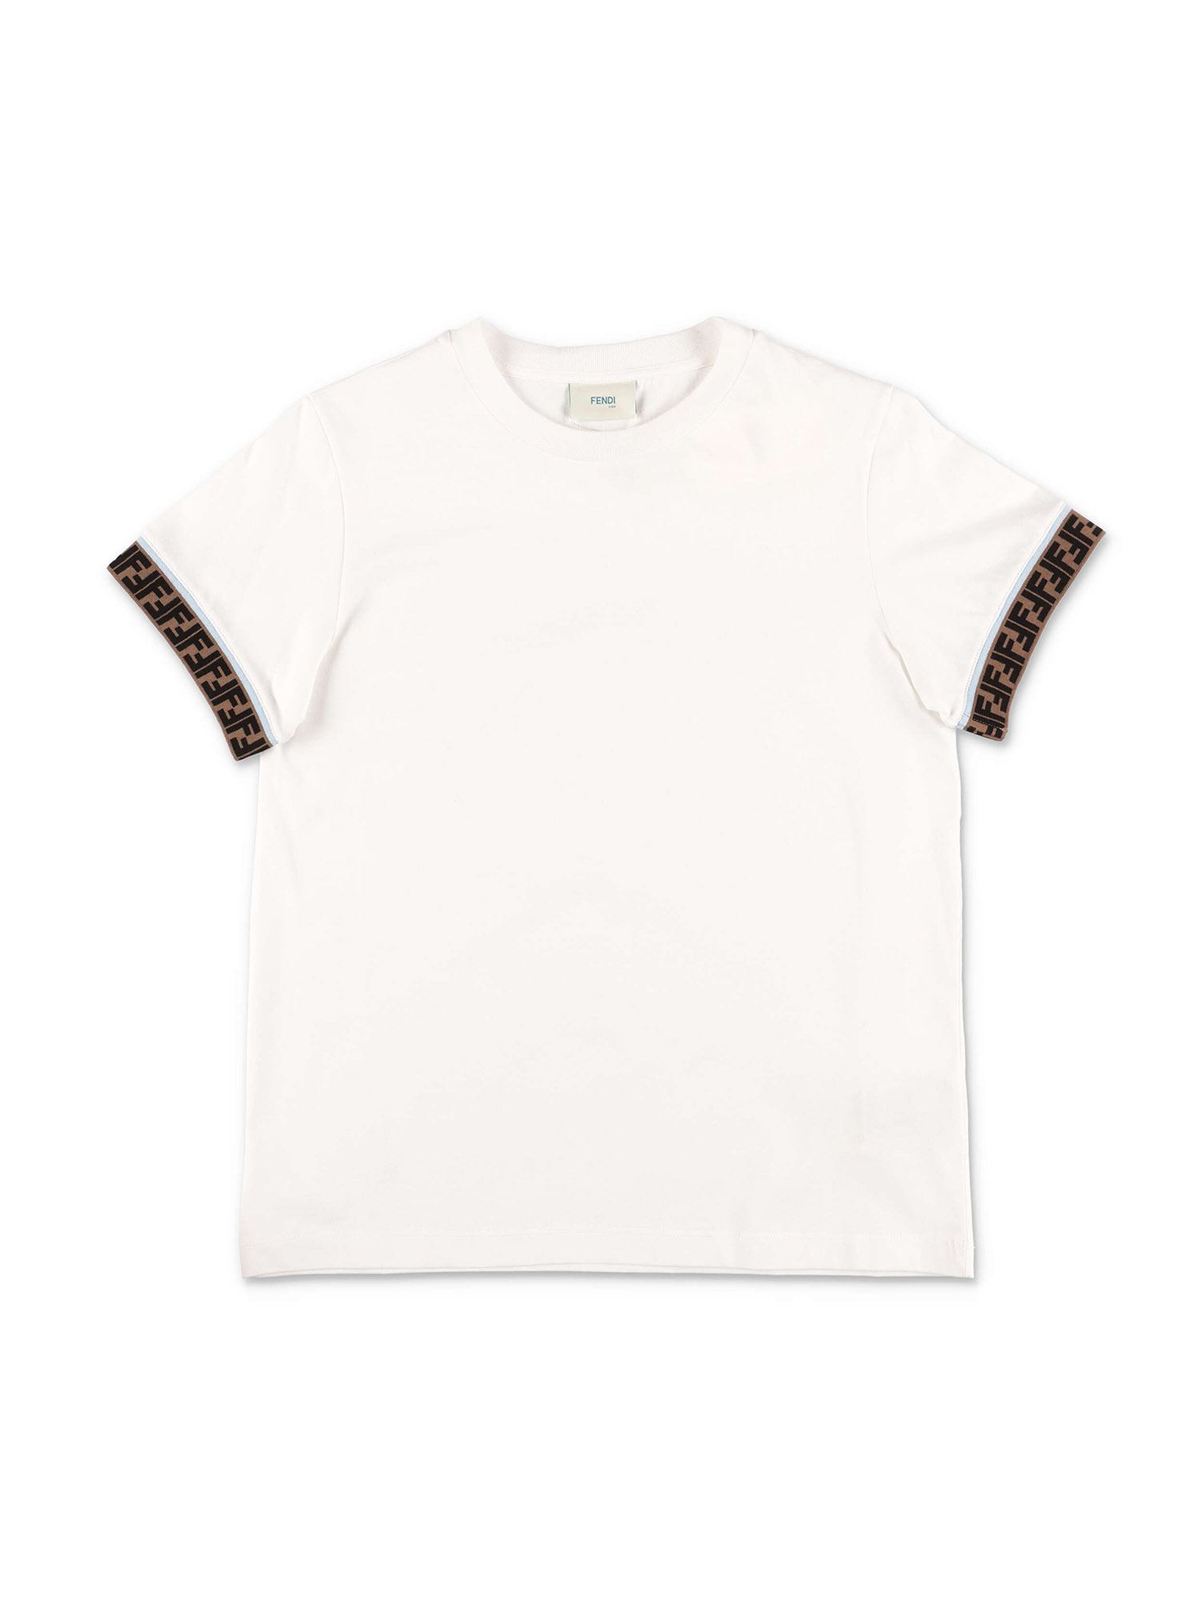 Fendi Jr Kids' White T-shirt With Logo Details